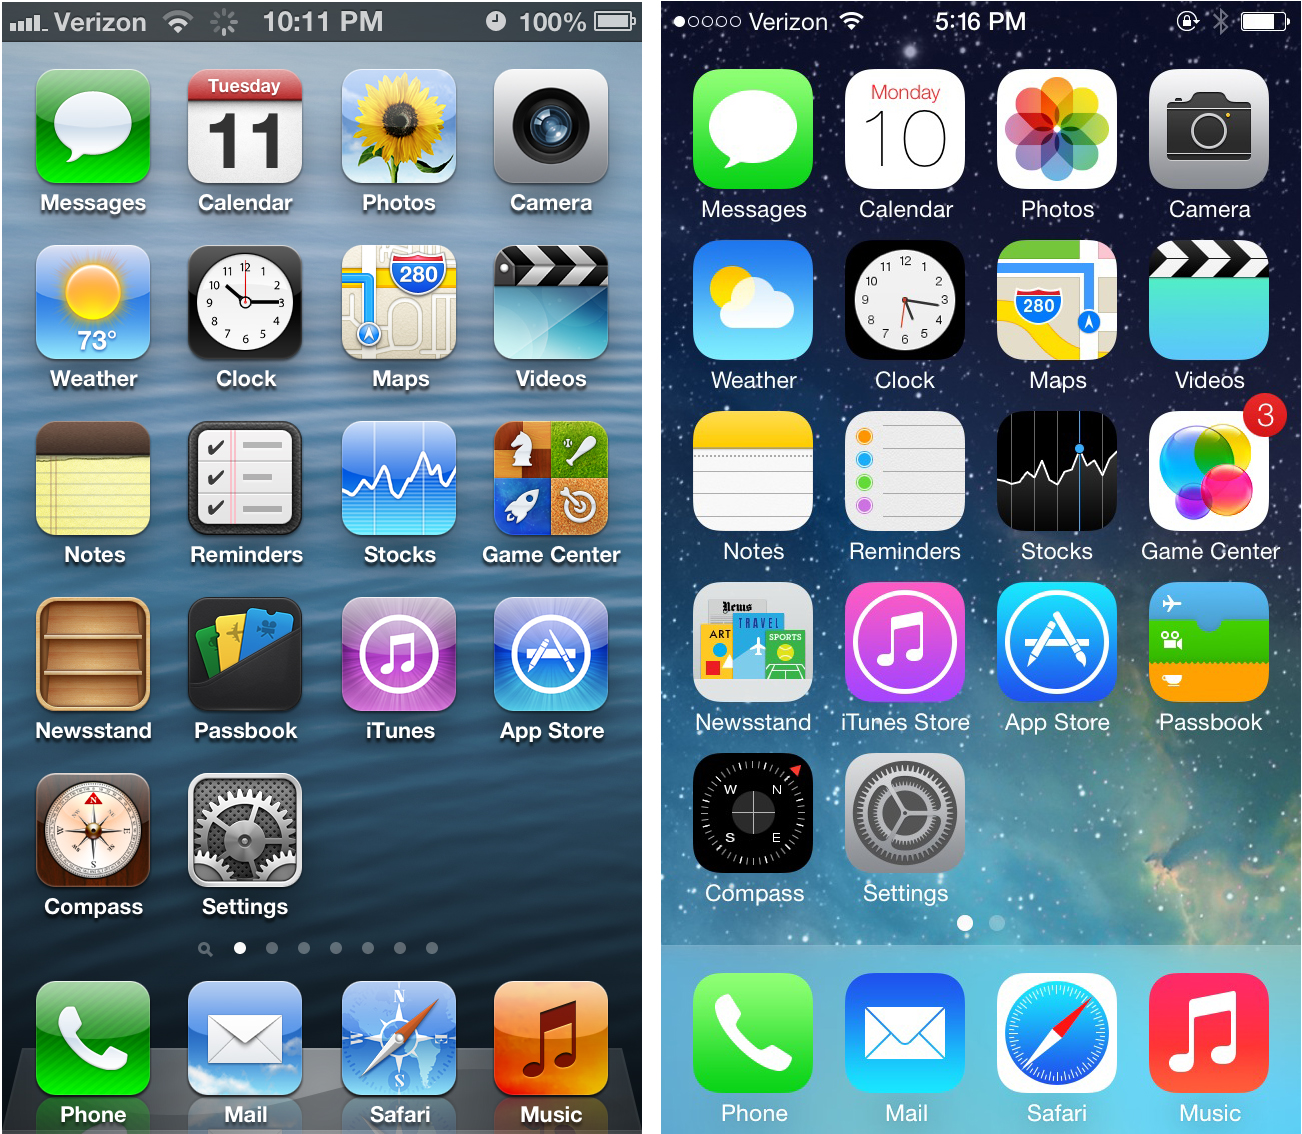 iPhone 6 iOS 7 Home Screen